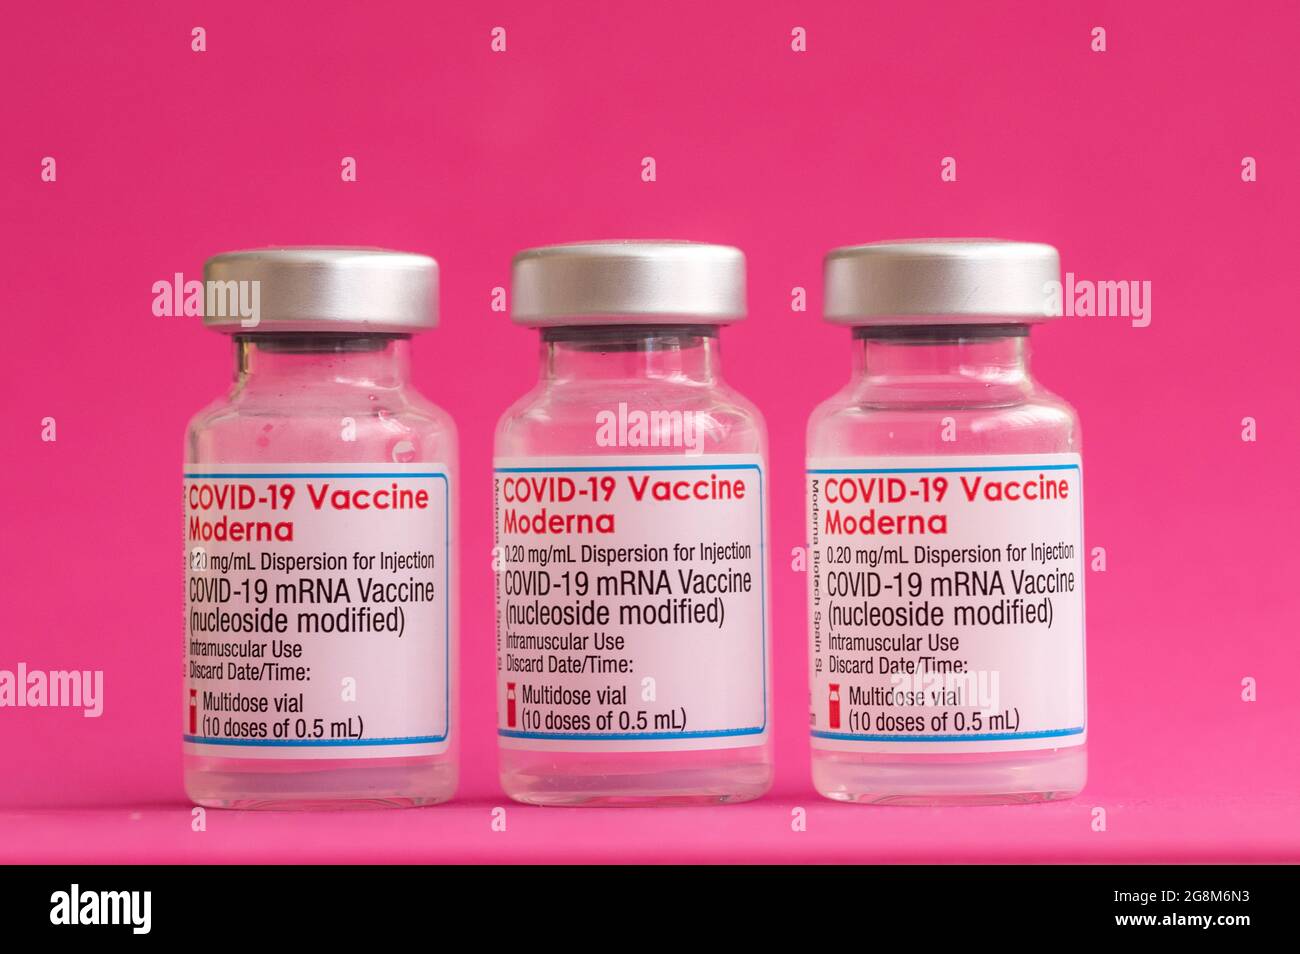 Vials of Moderna vaccine (COVID-19 mRNA, nucleoside modified) for coronavirus treatment. Stock Photo